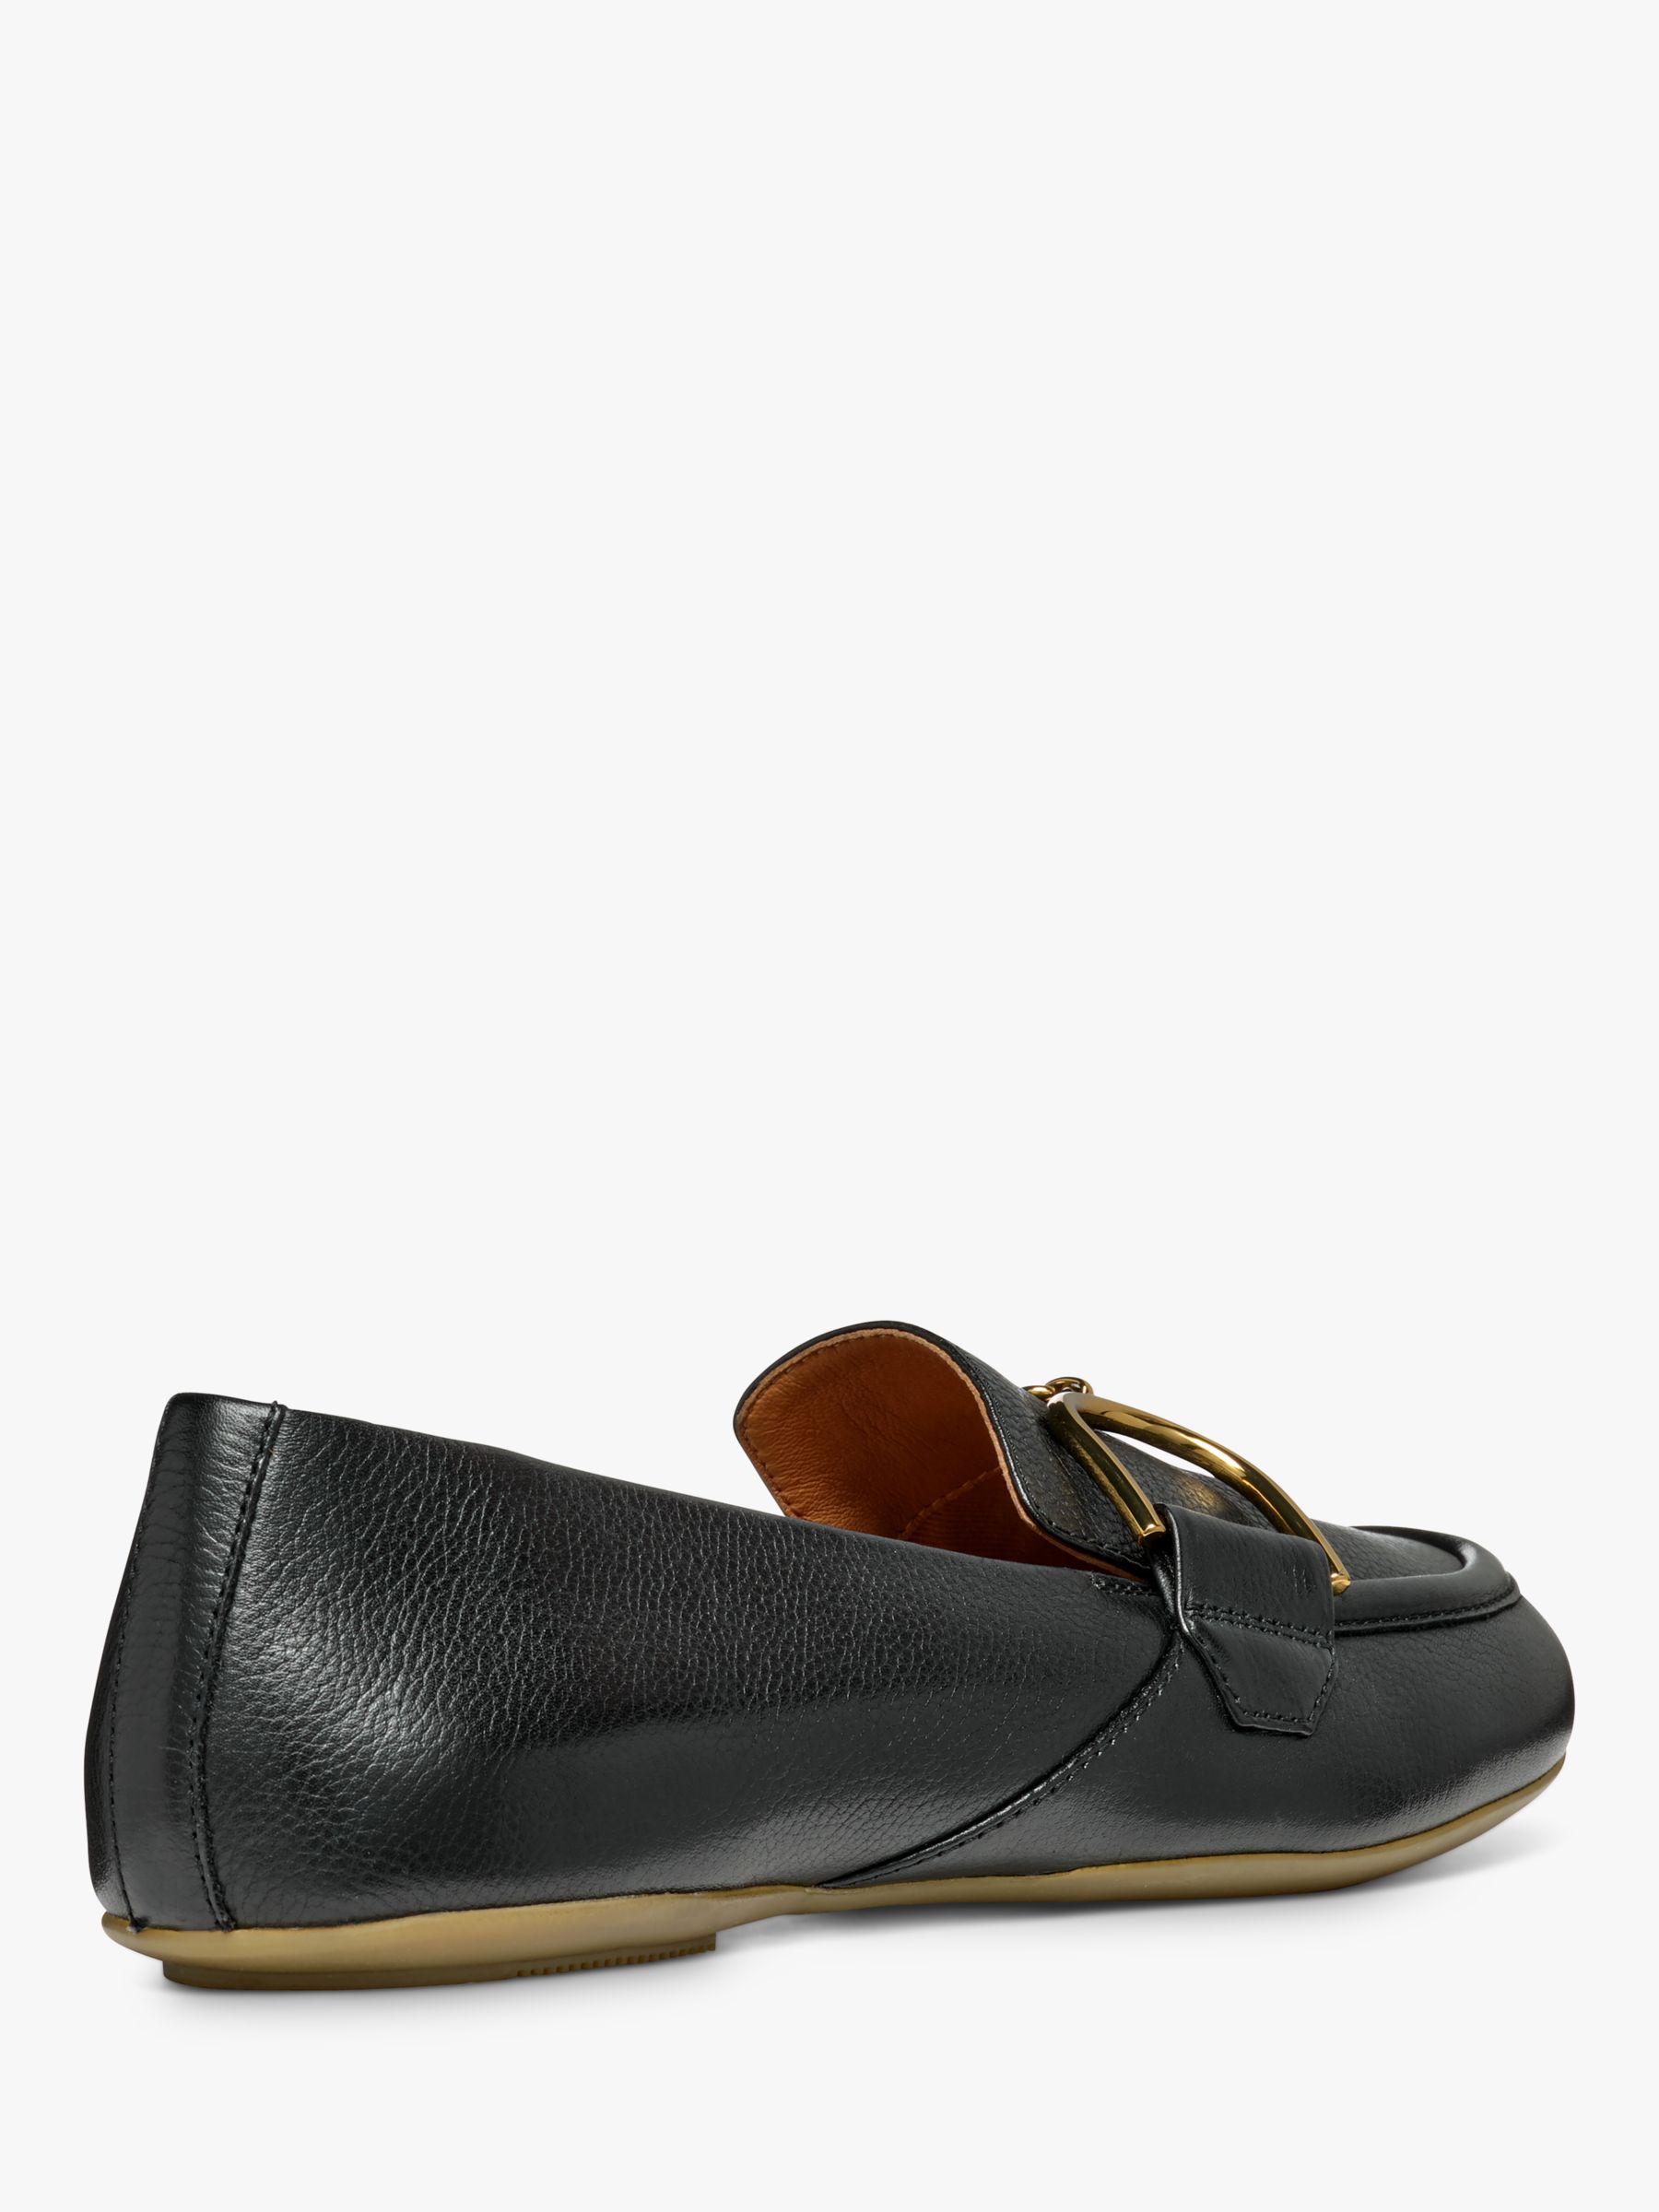 Geox Palmaria Leather City Loafers, Black, EU37.5